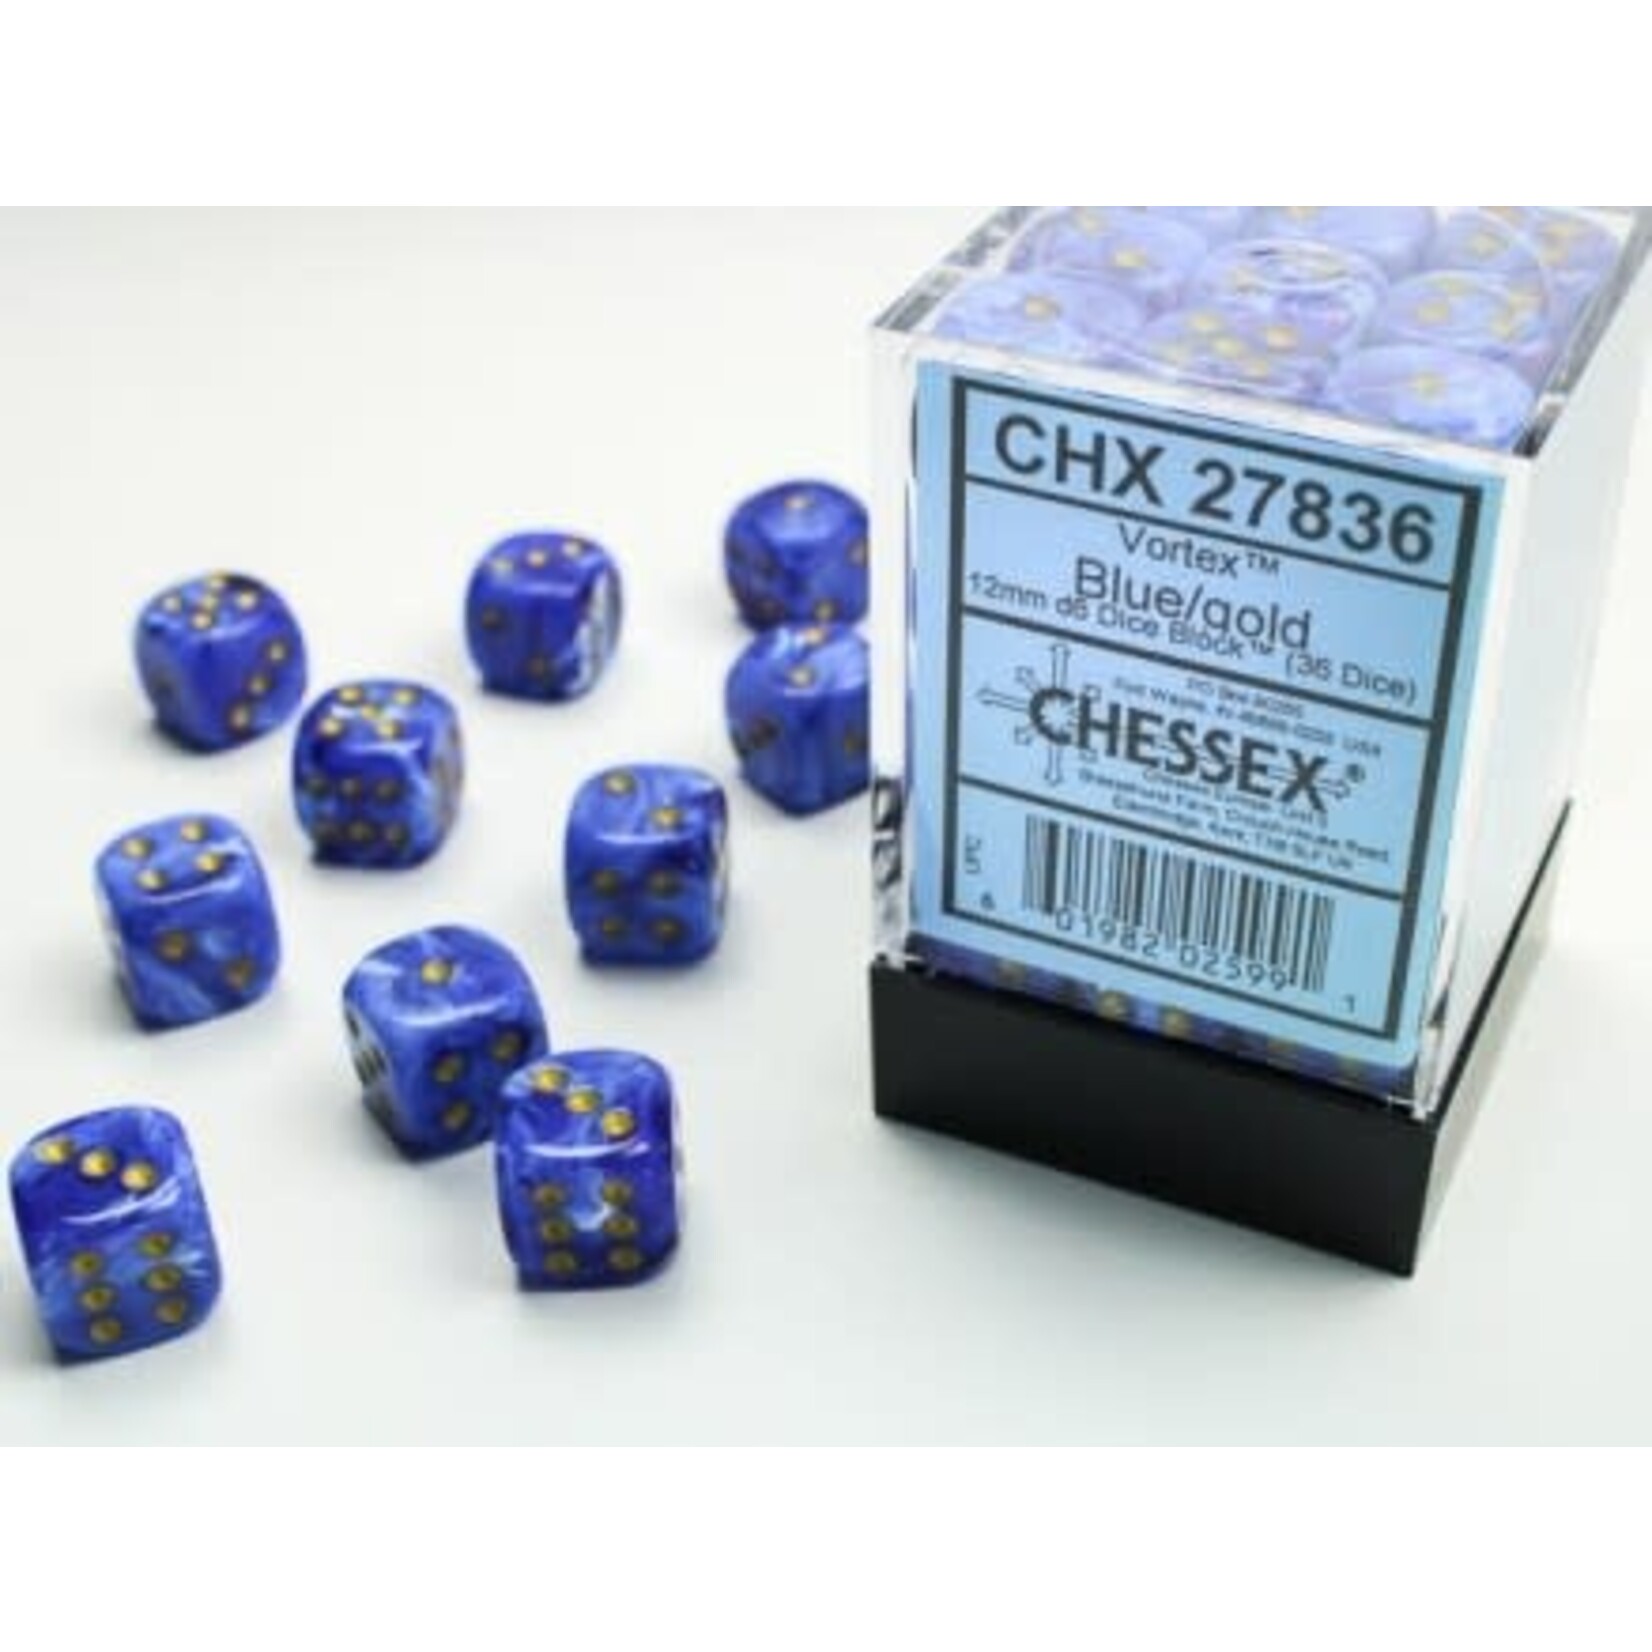 Chessex Vortex Blue/gold 12mm d6 Dice Block (36 dice)